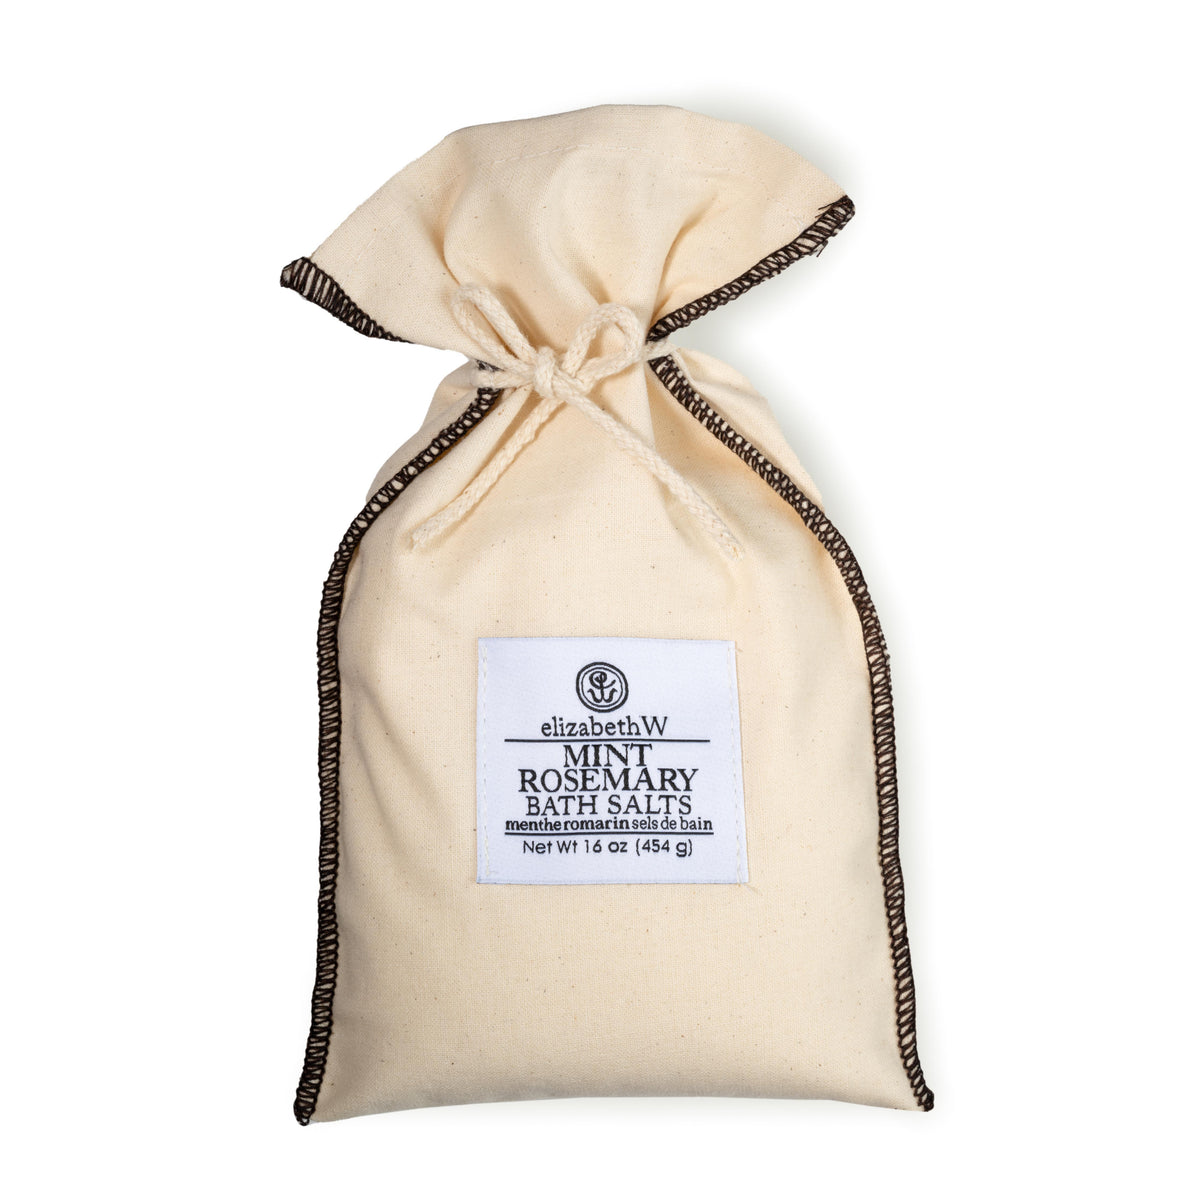 Mint Rosemary Bag of Salts